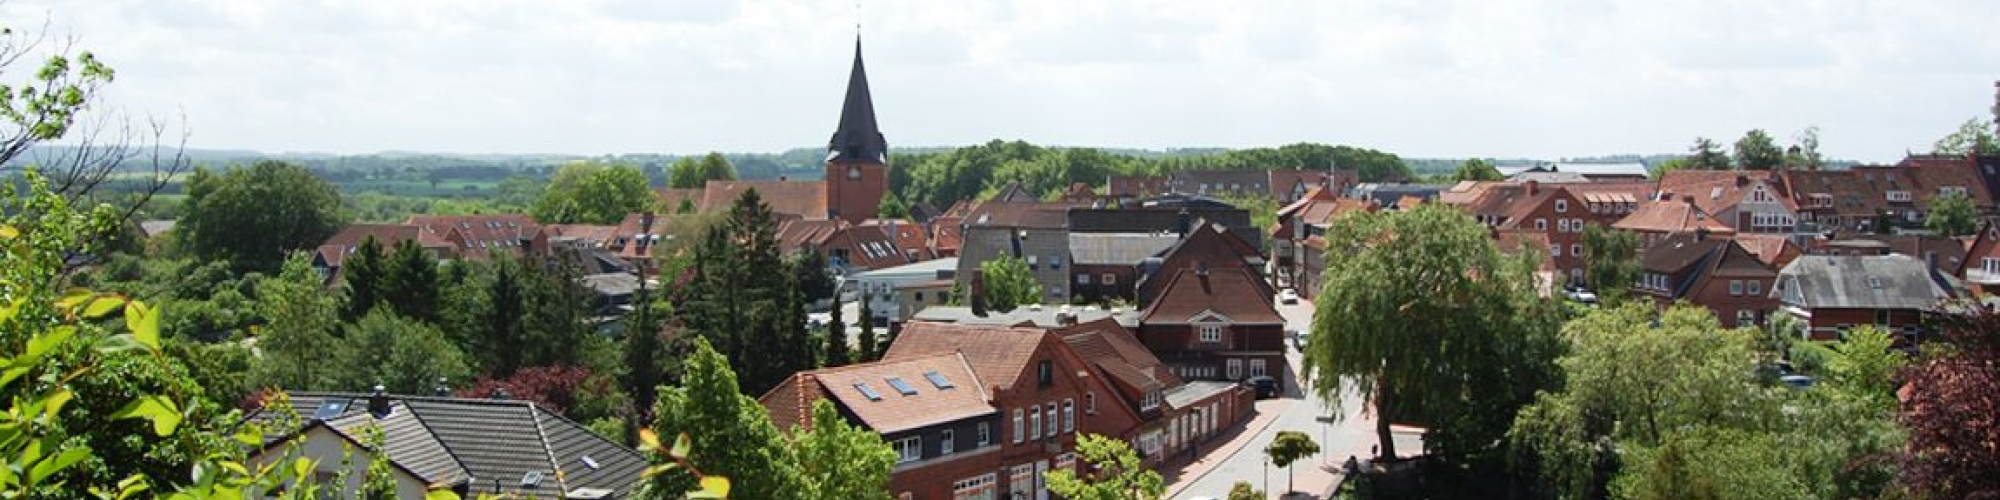 Amt Lütjenburg